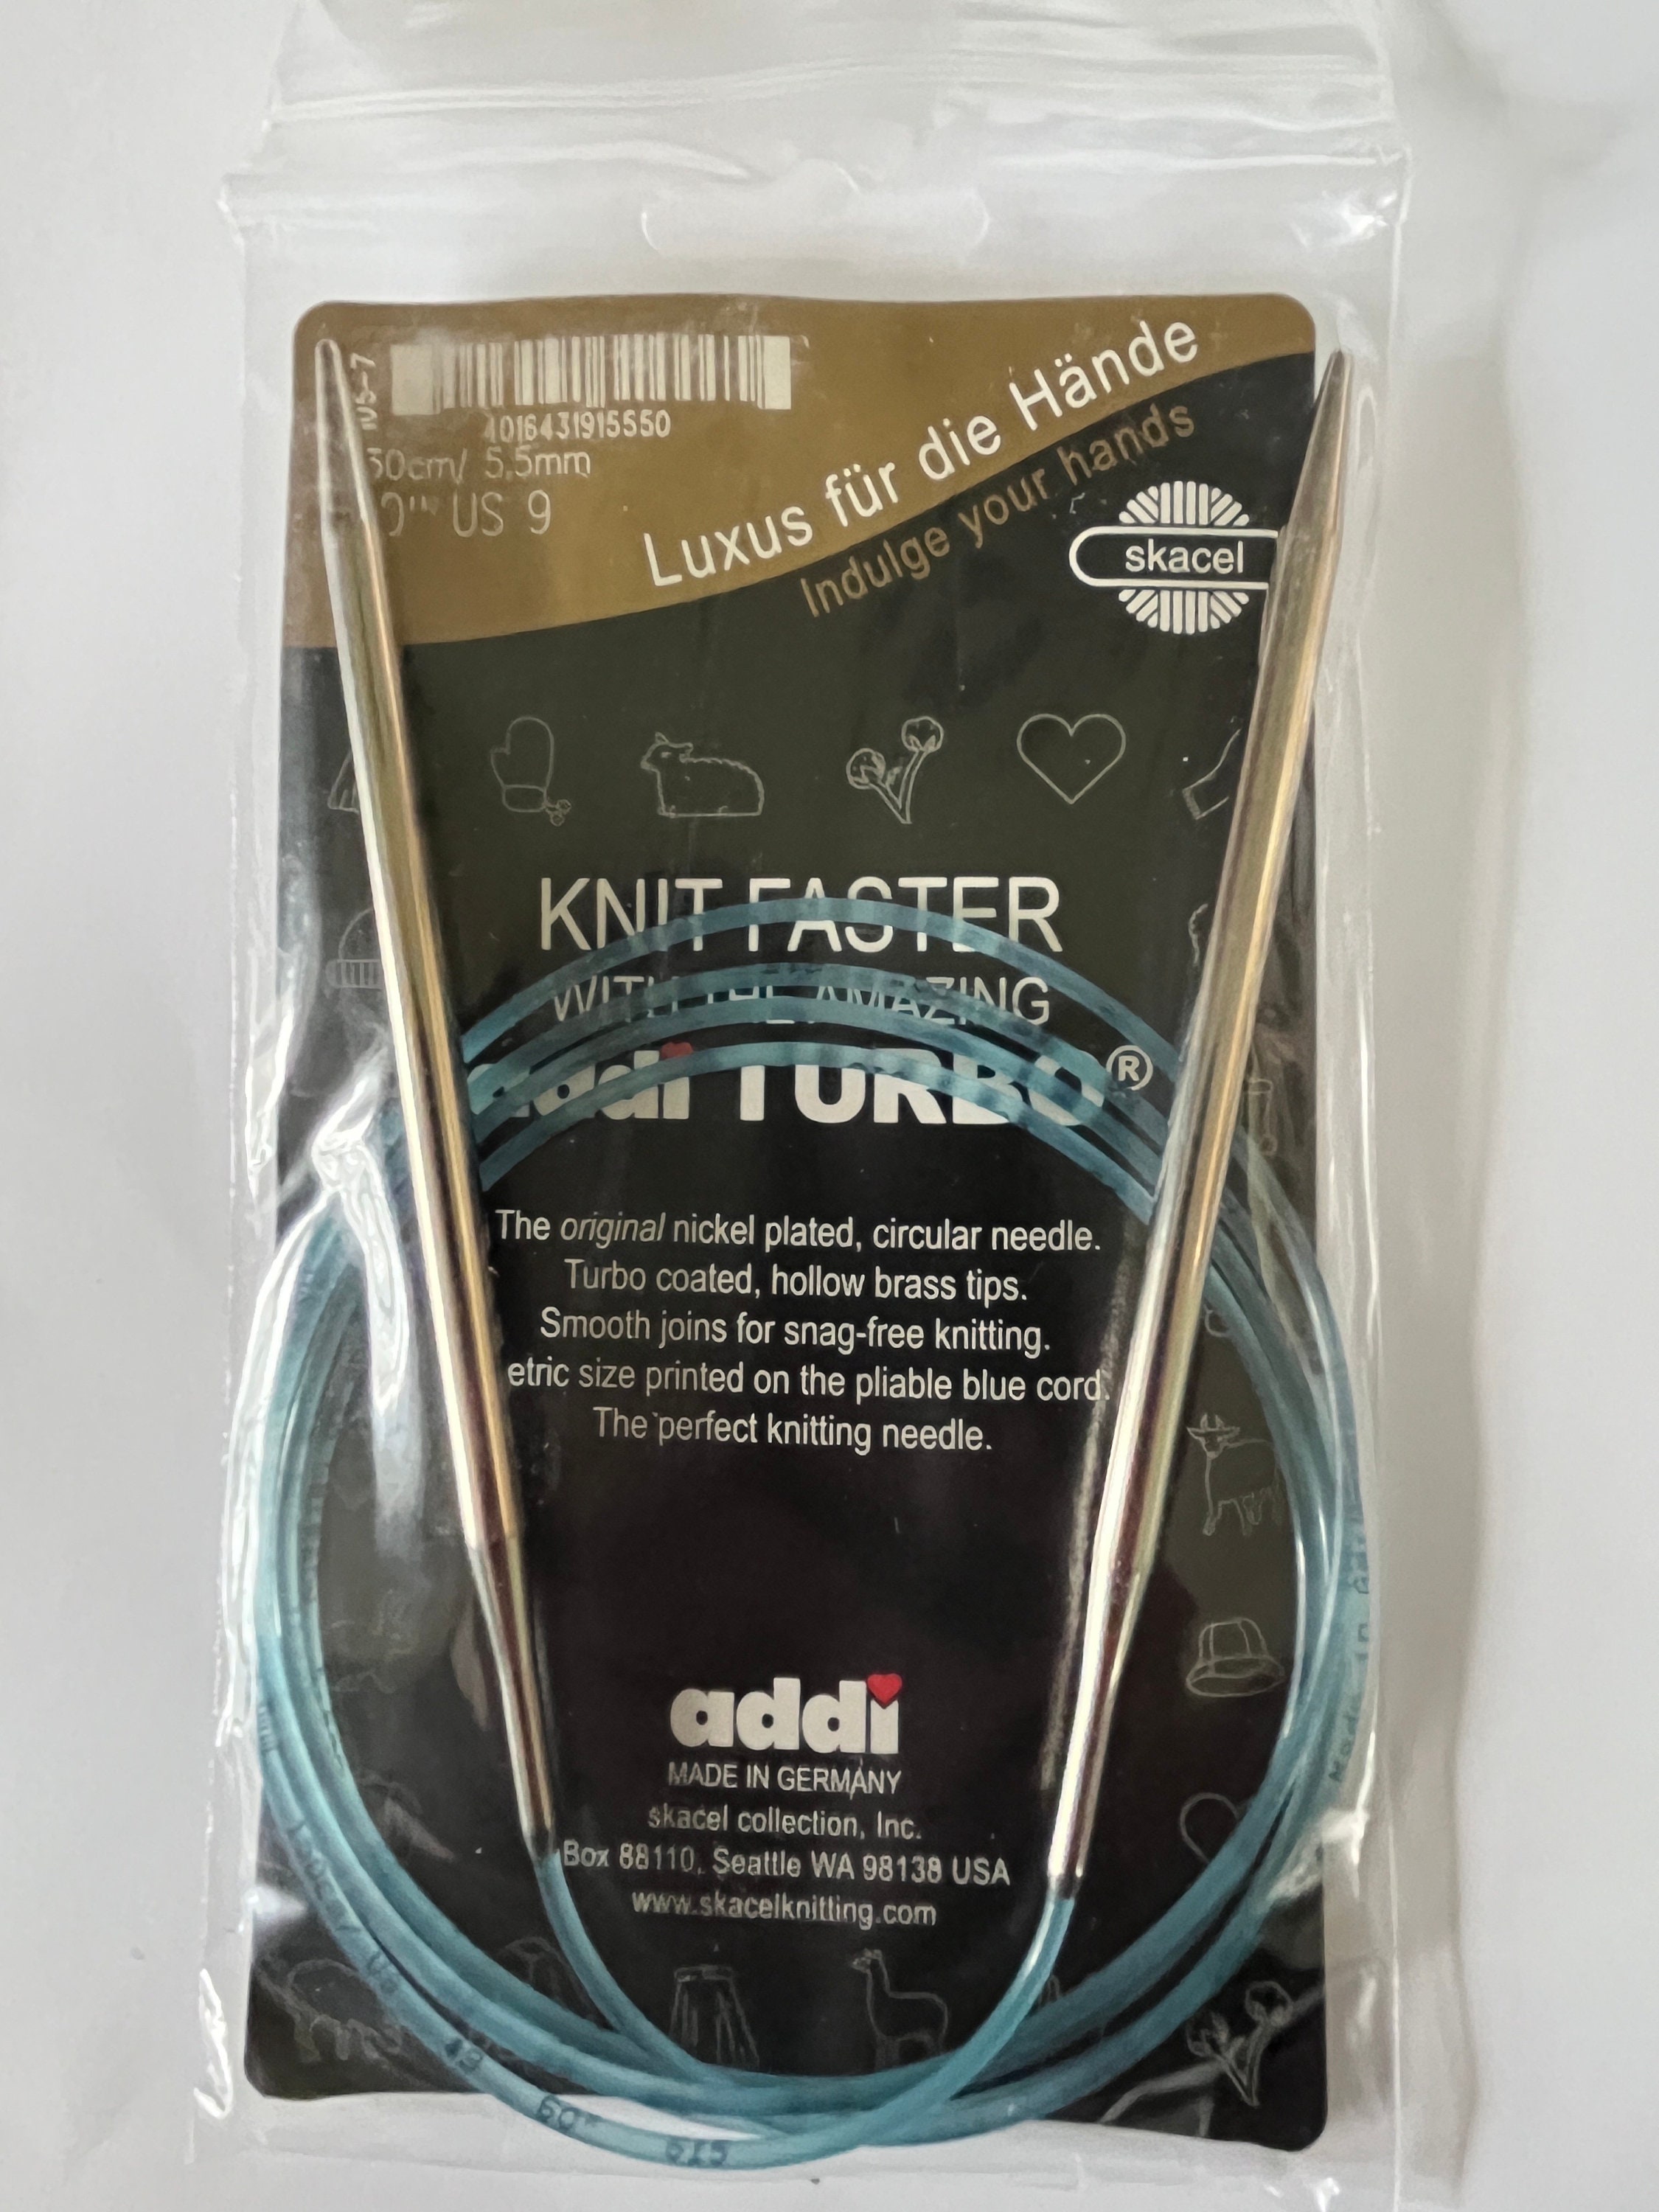 addi Turbo Rockets Circular Knitting Needles Skacel USA US 9 (5.5mm)